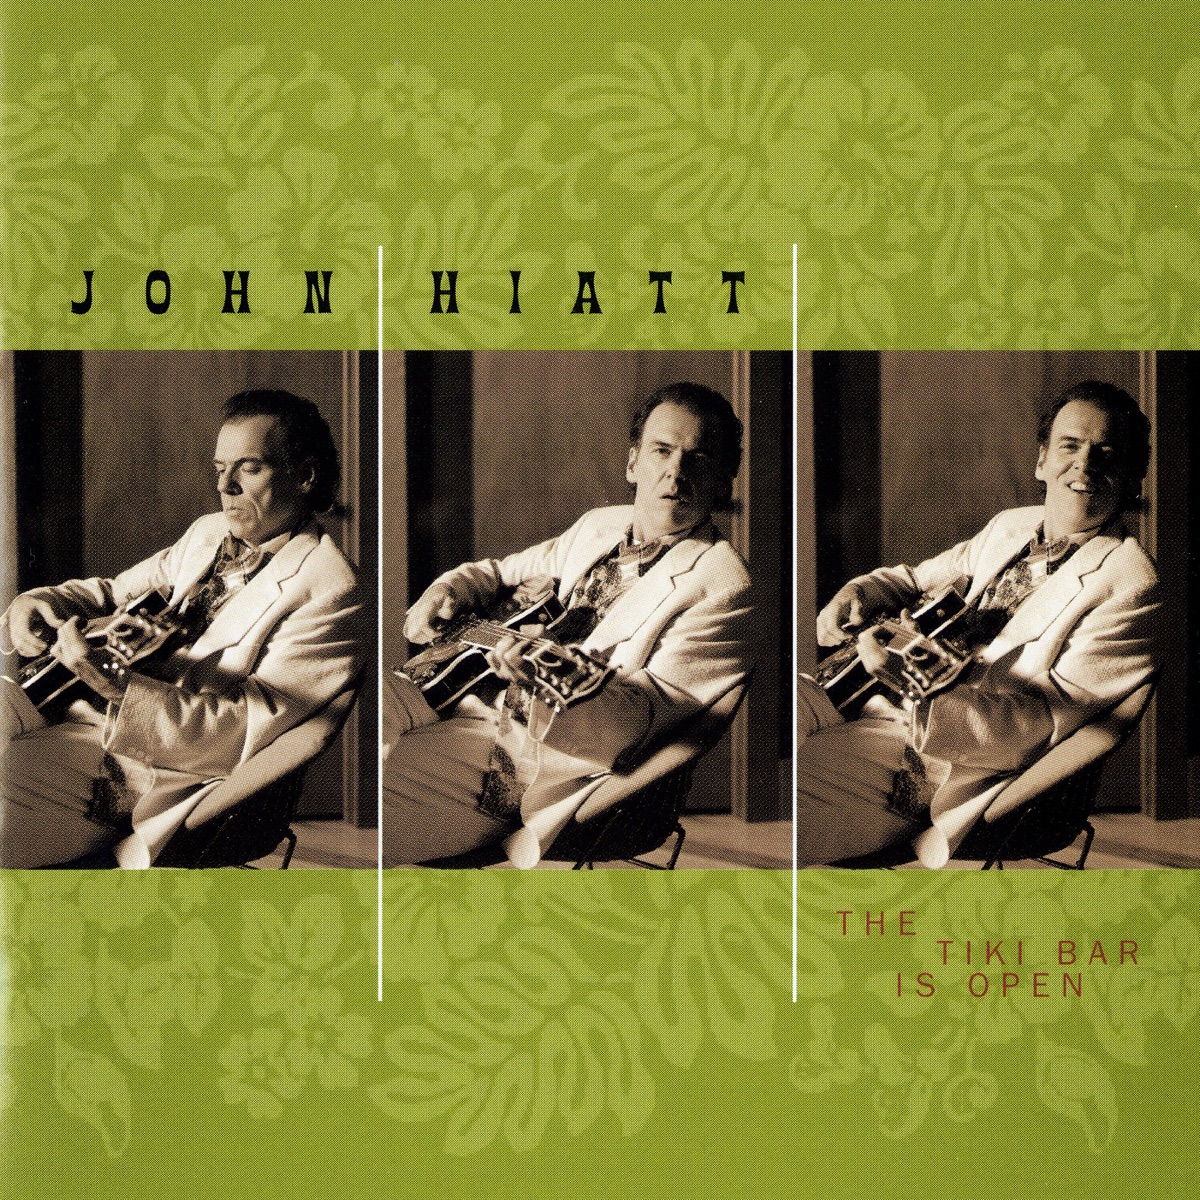 Crossing Muddy Waters - Album by John Hiatt - Apple Music